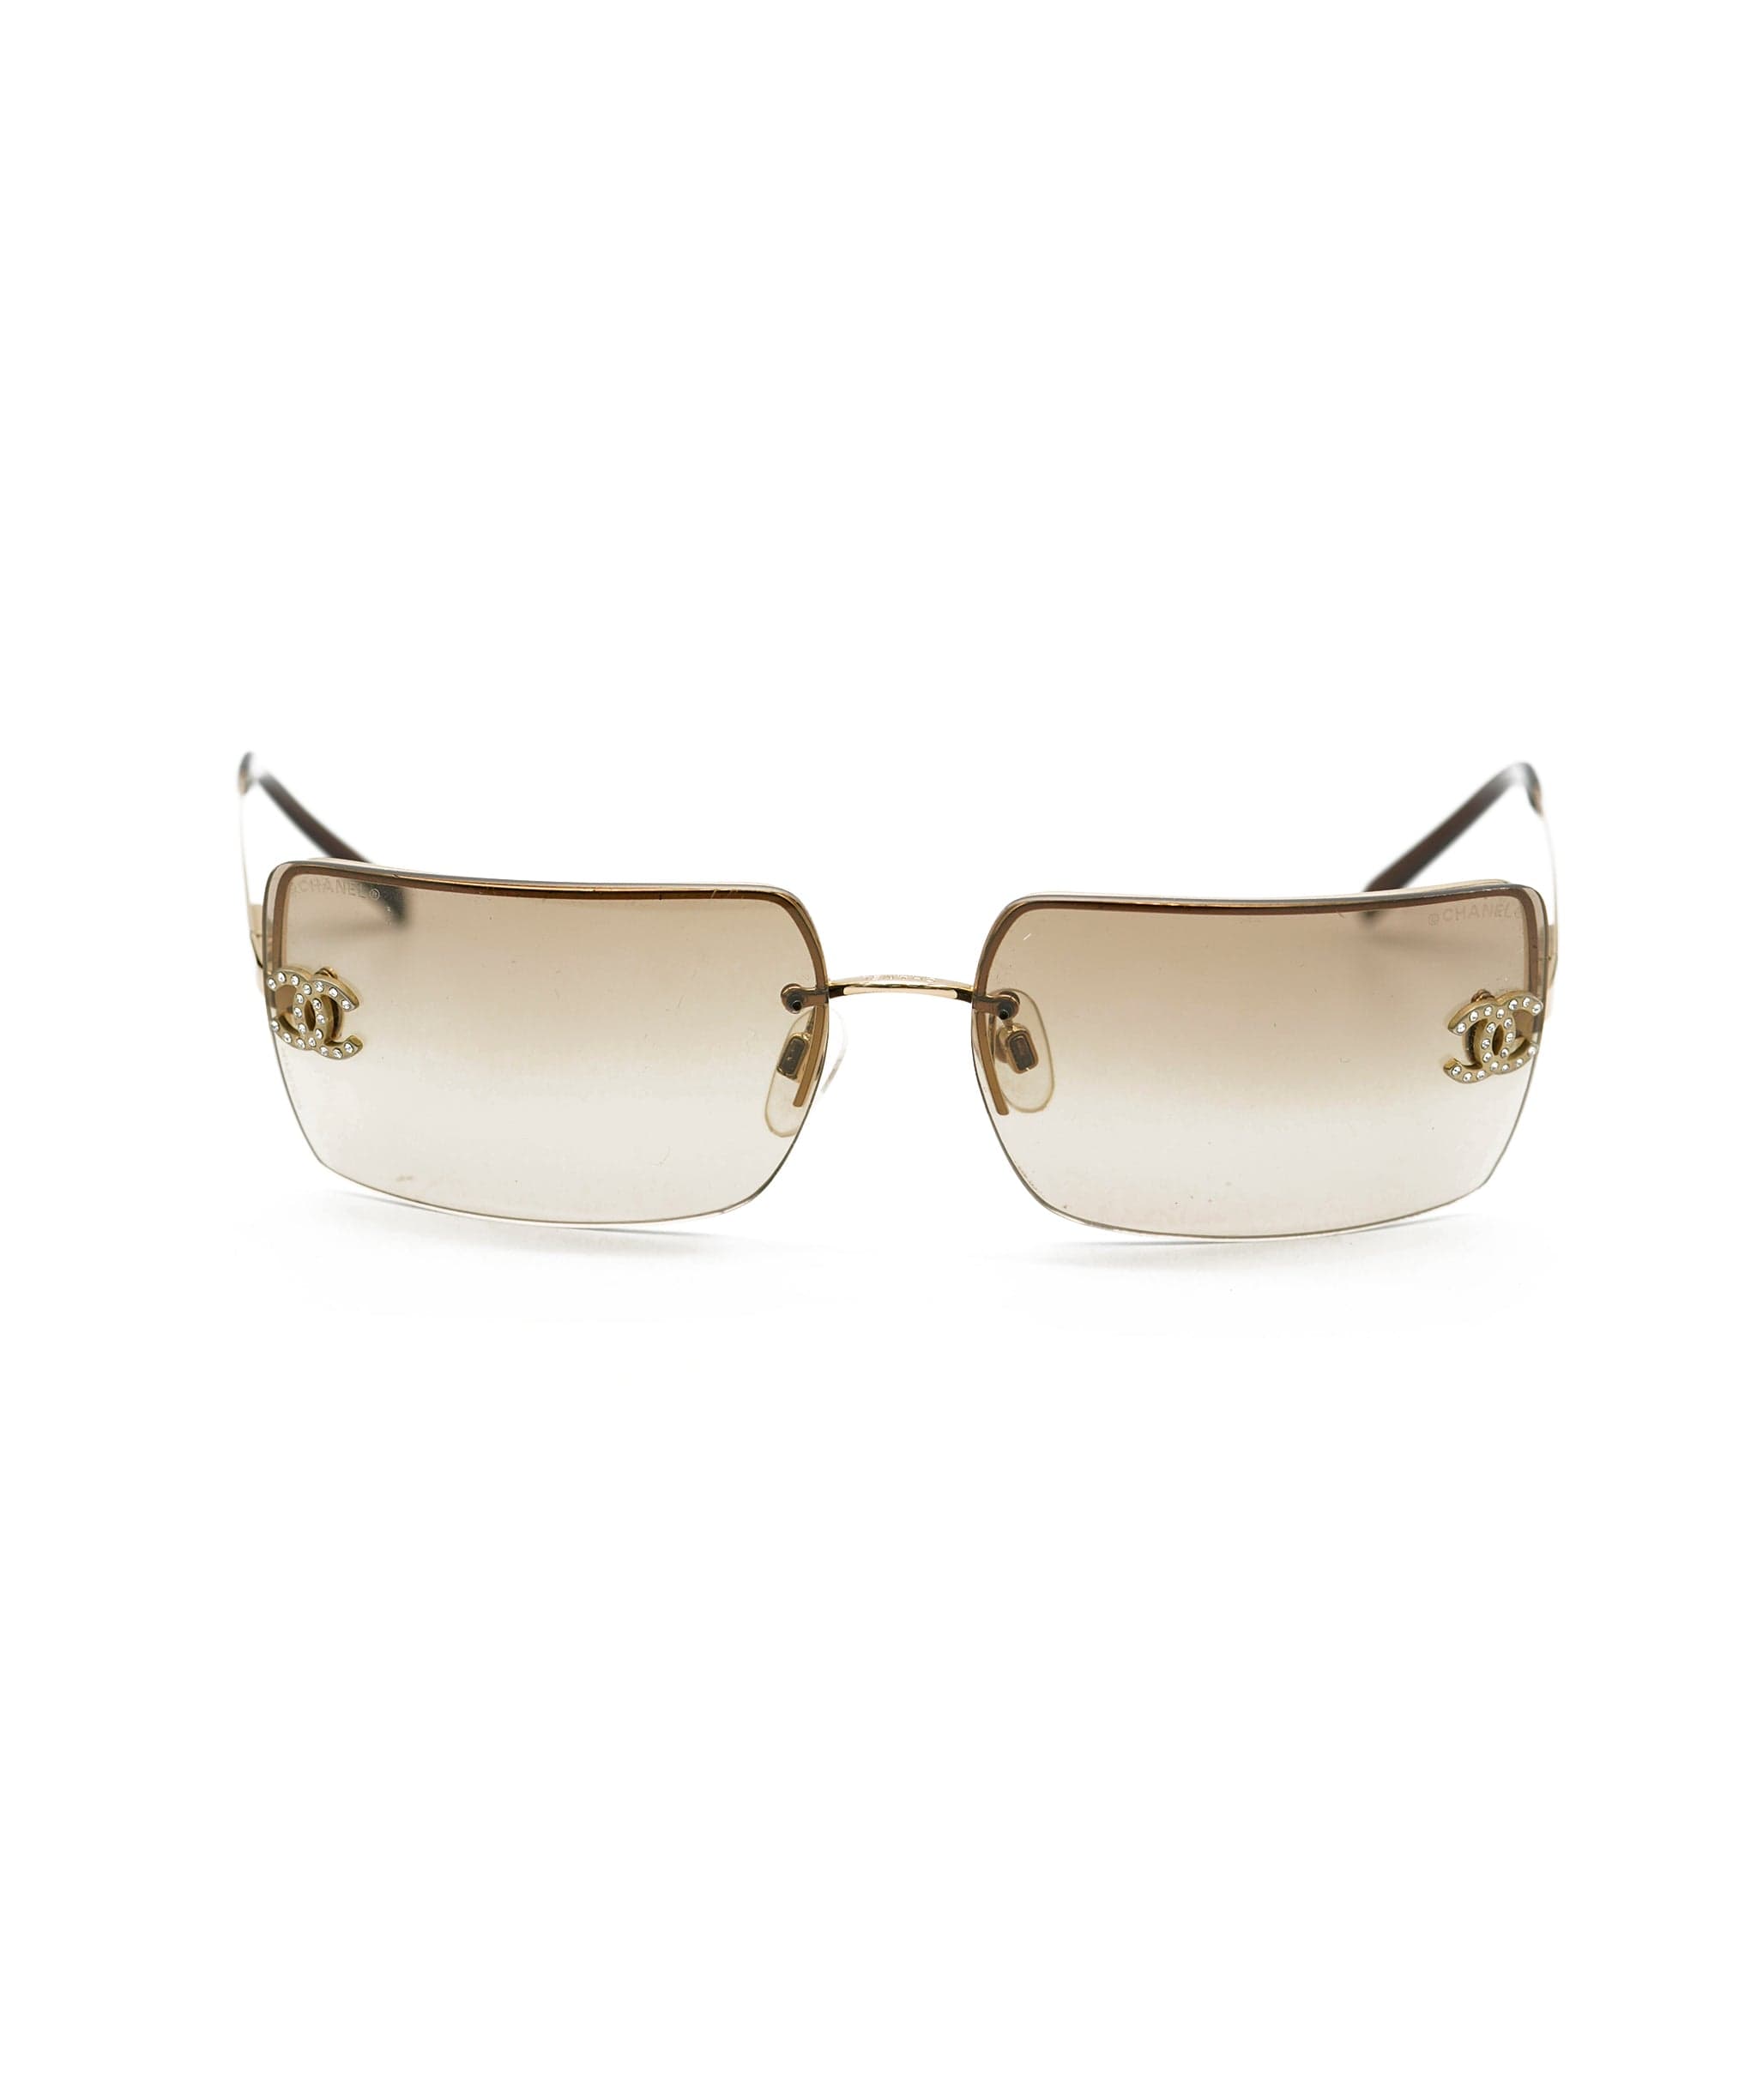 CHANEL Chanel sunglasses 4104-B Coco mark rhinestone gold brown Gradation  used